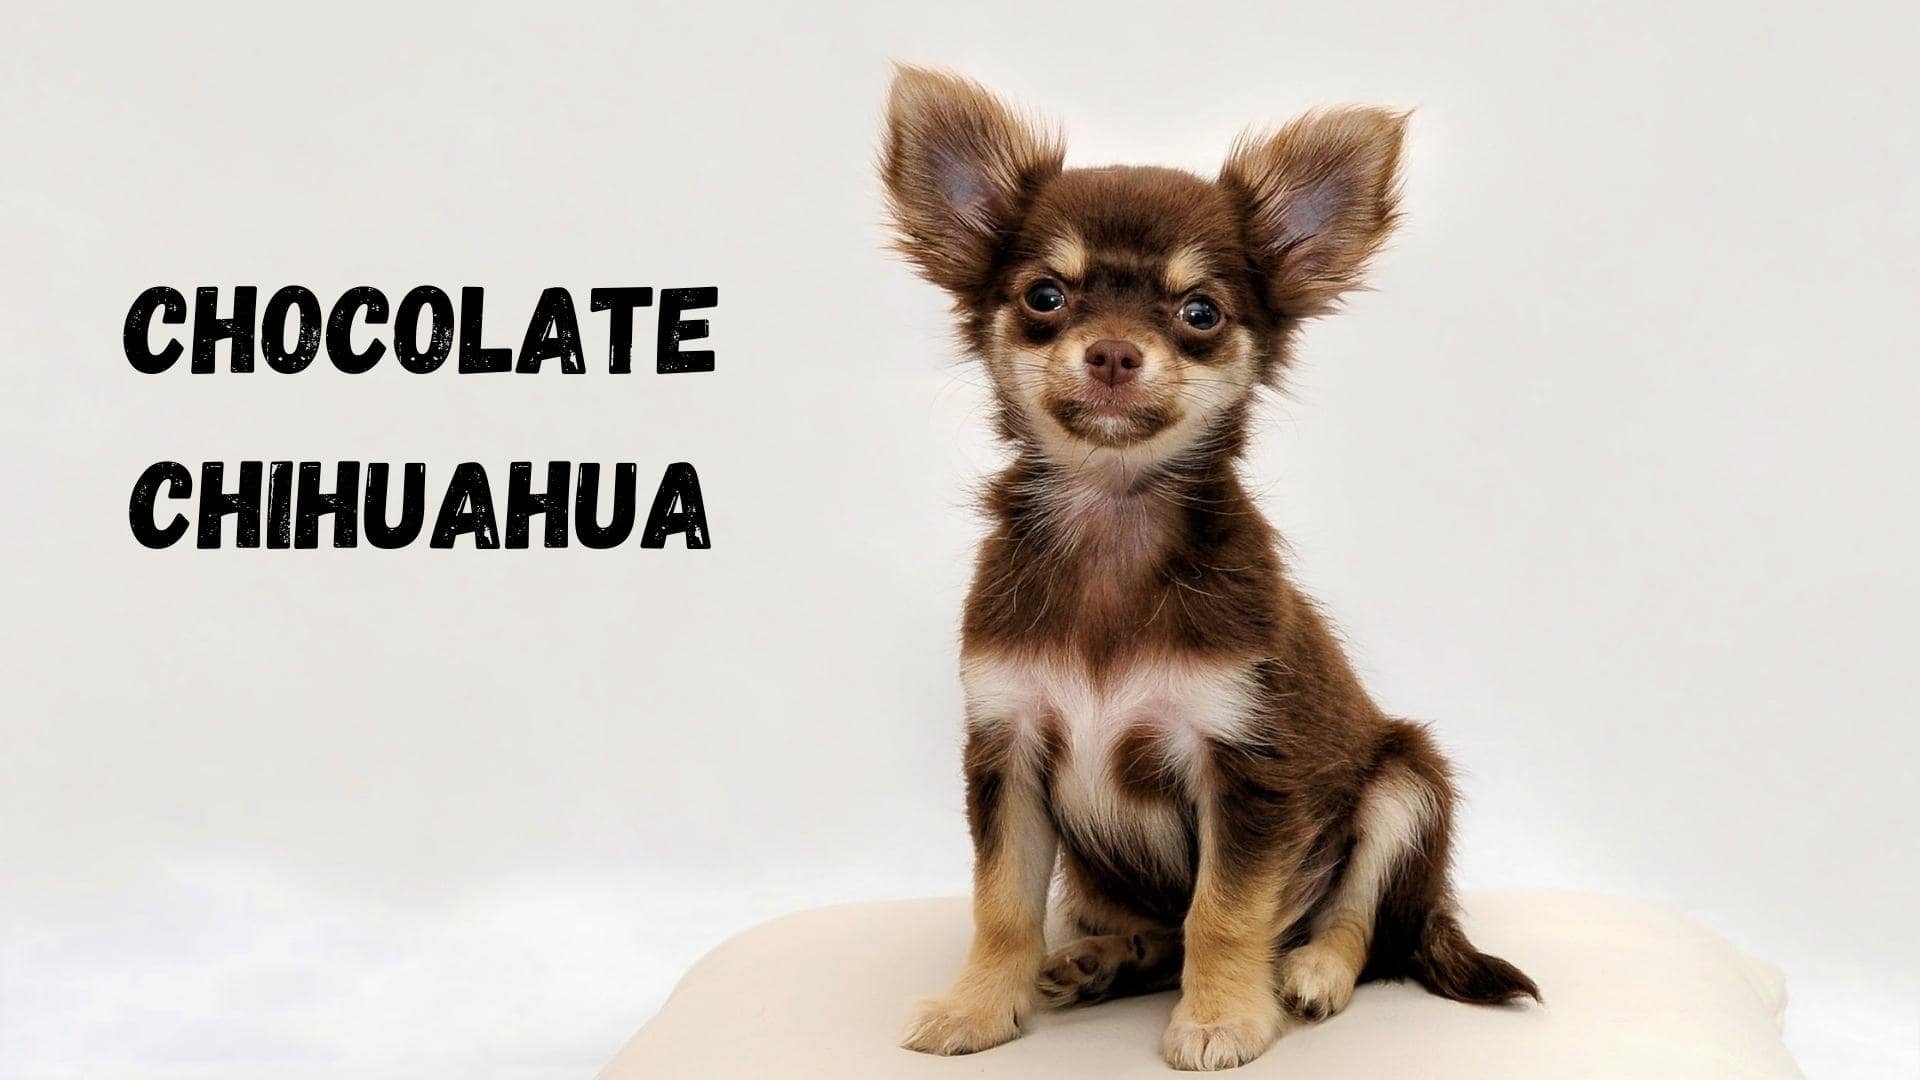 Chocolate Chihuahua